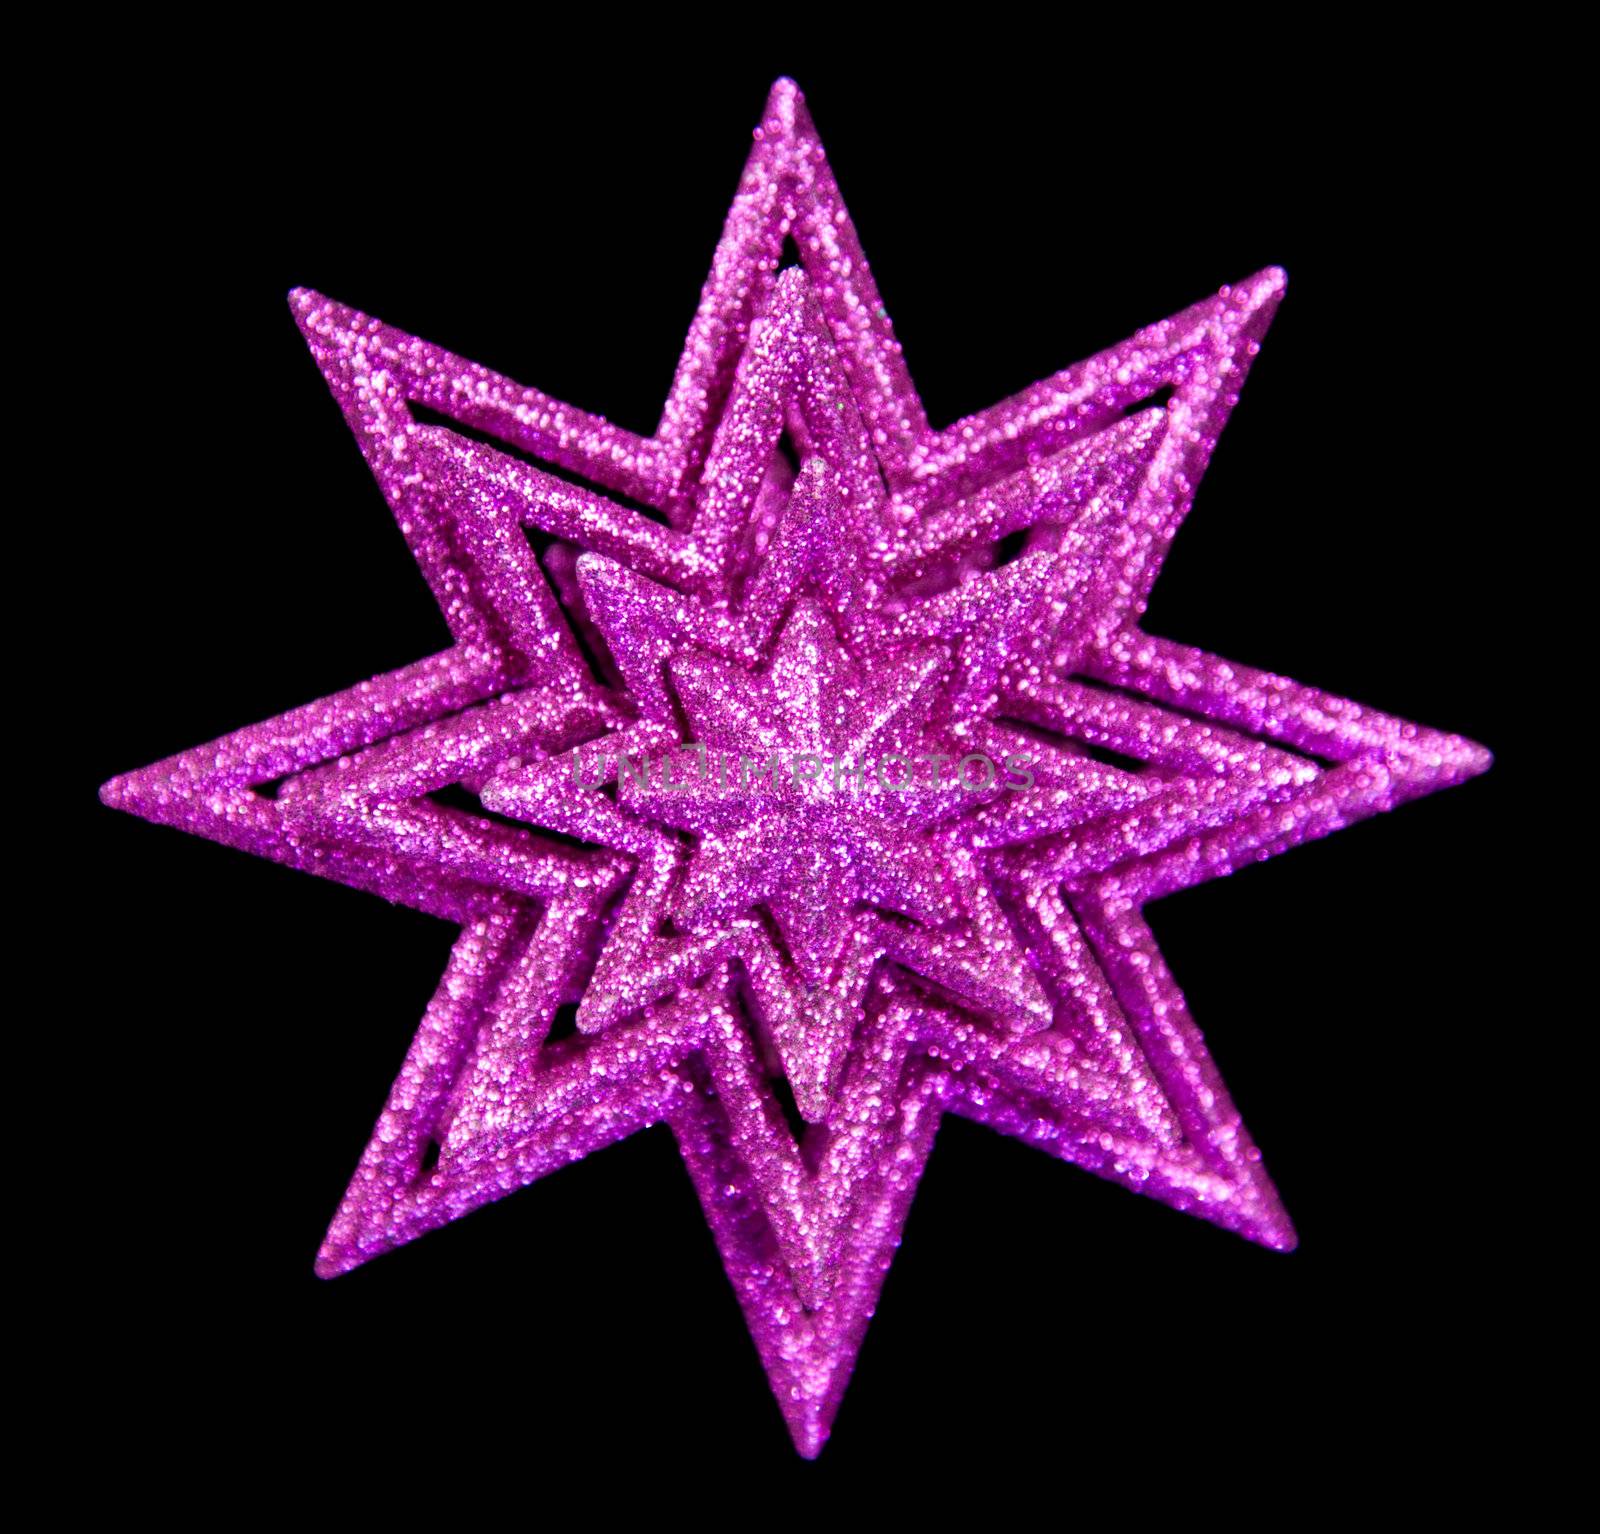 Isolated purple star against black